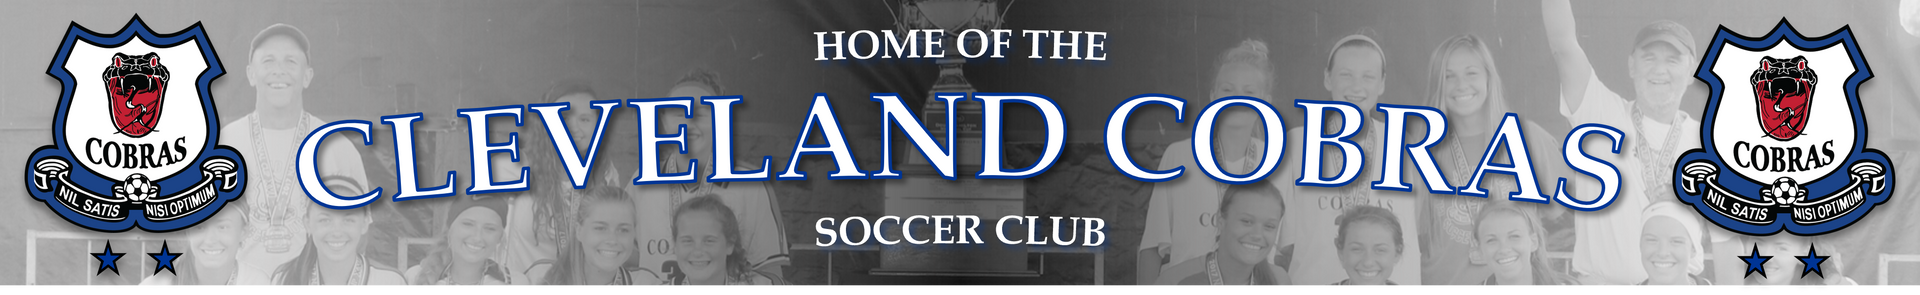 Cleveland Cobras Soccer Club logo and text